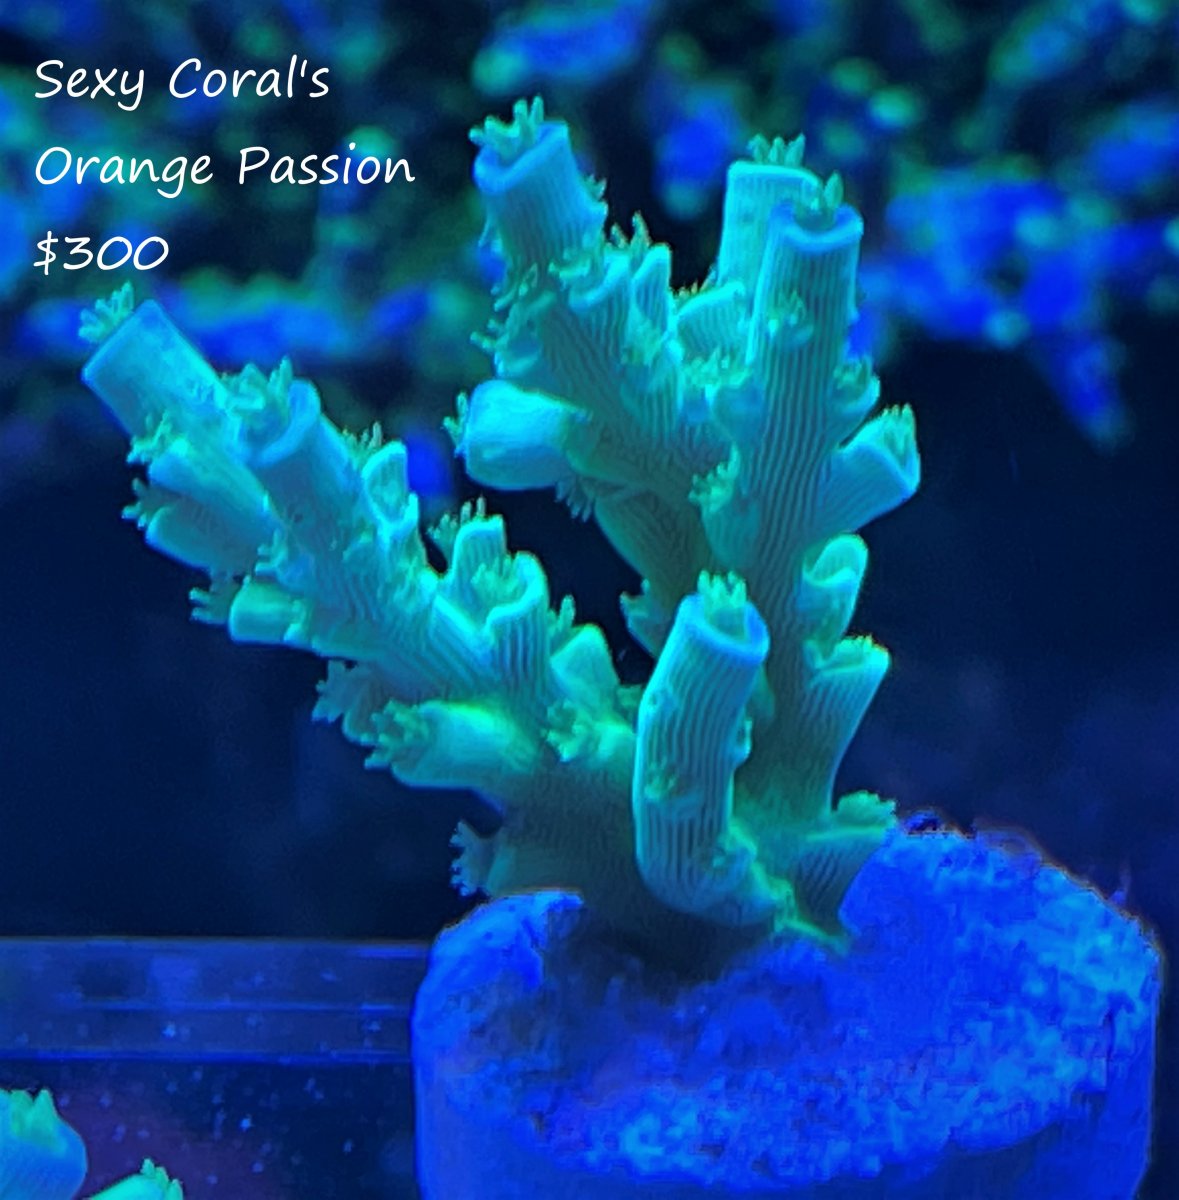 Sexy Corals Orange Passion $300.jpg